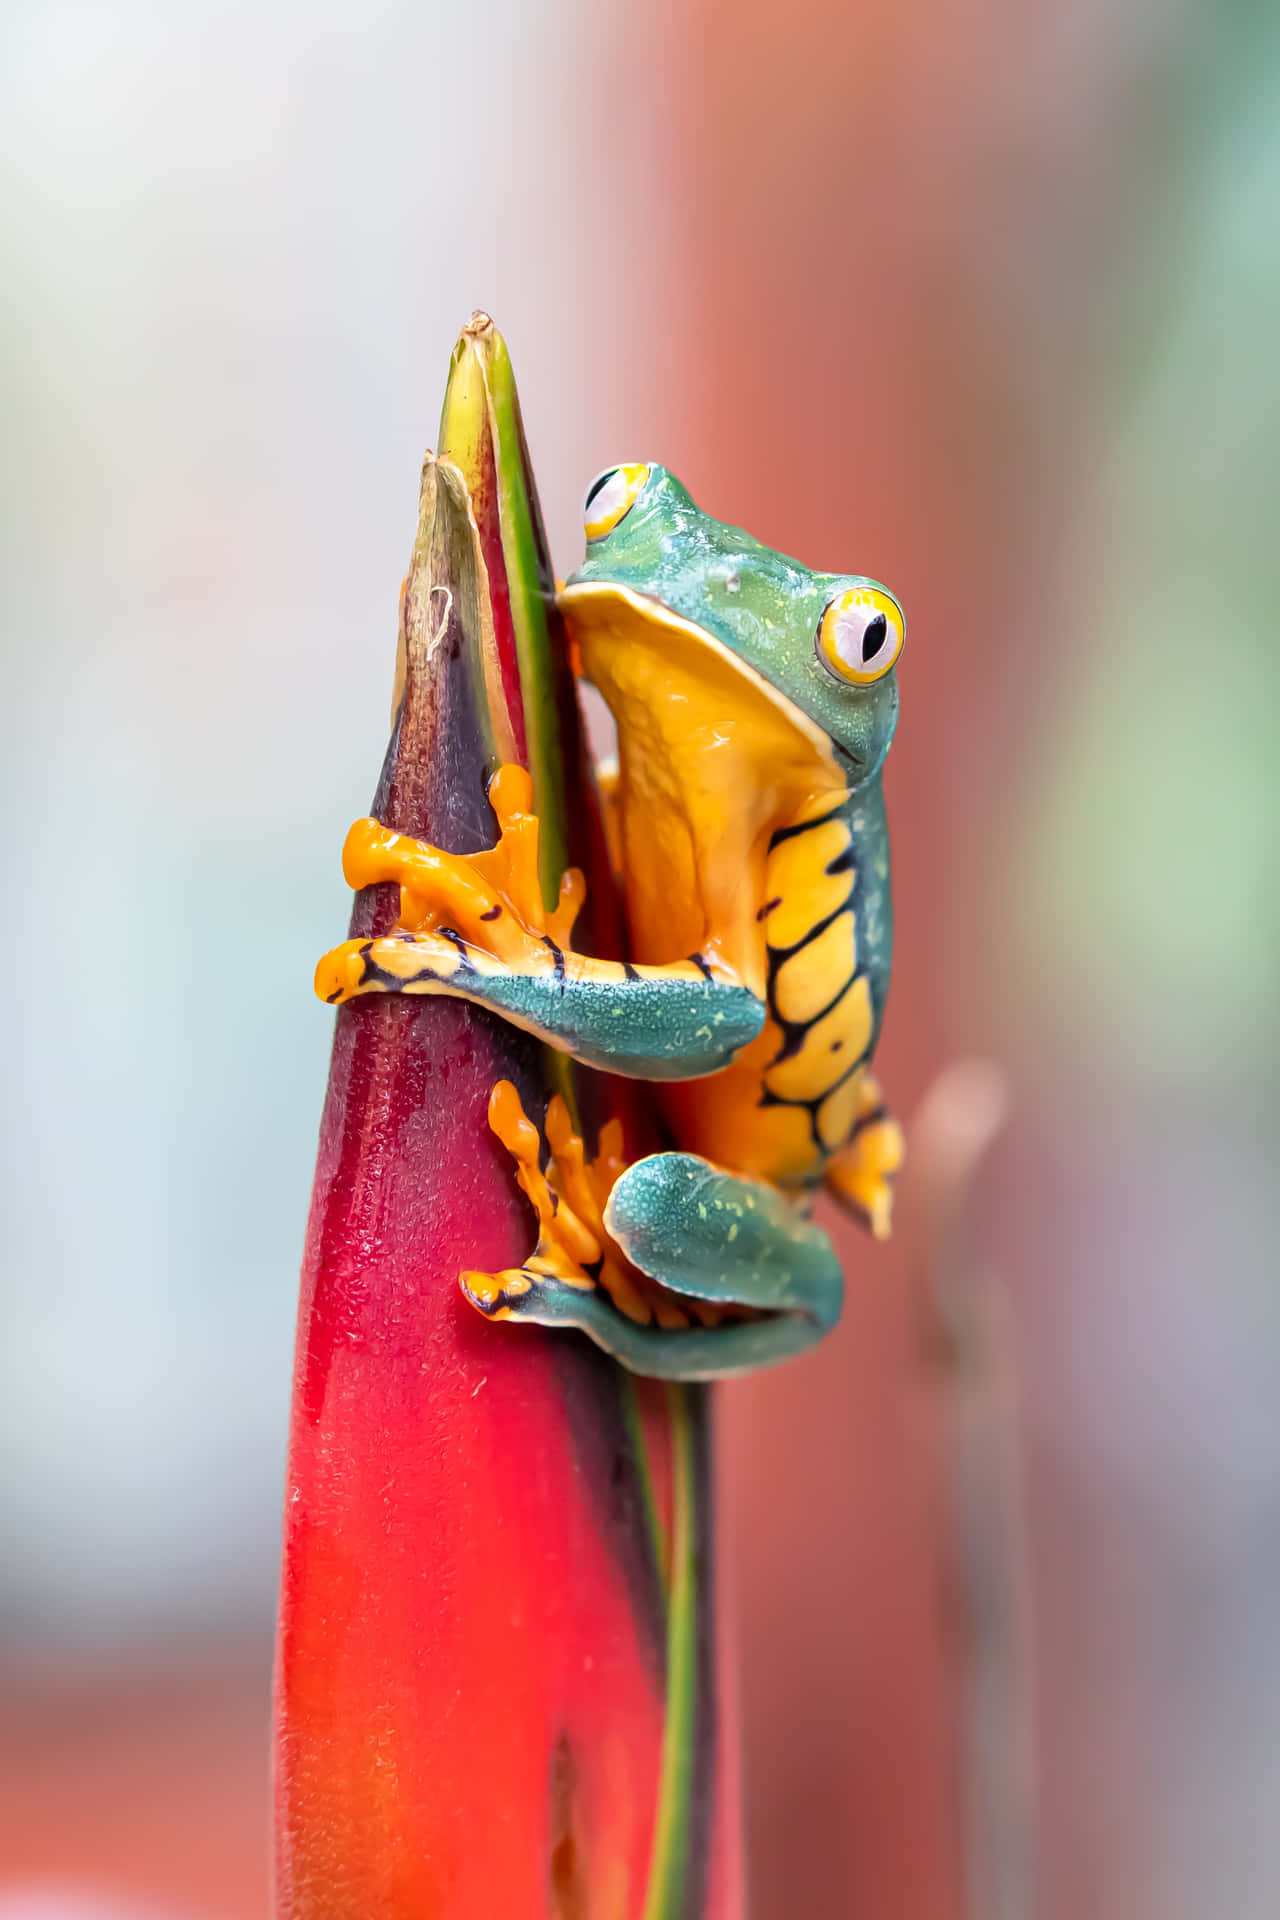 A Vibrant Green Frog In Natural Habitat